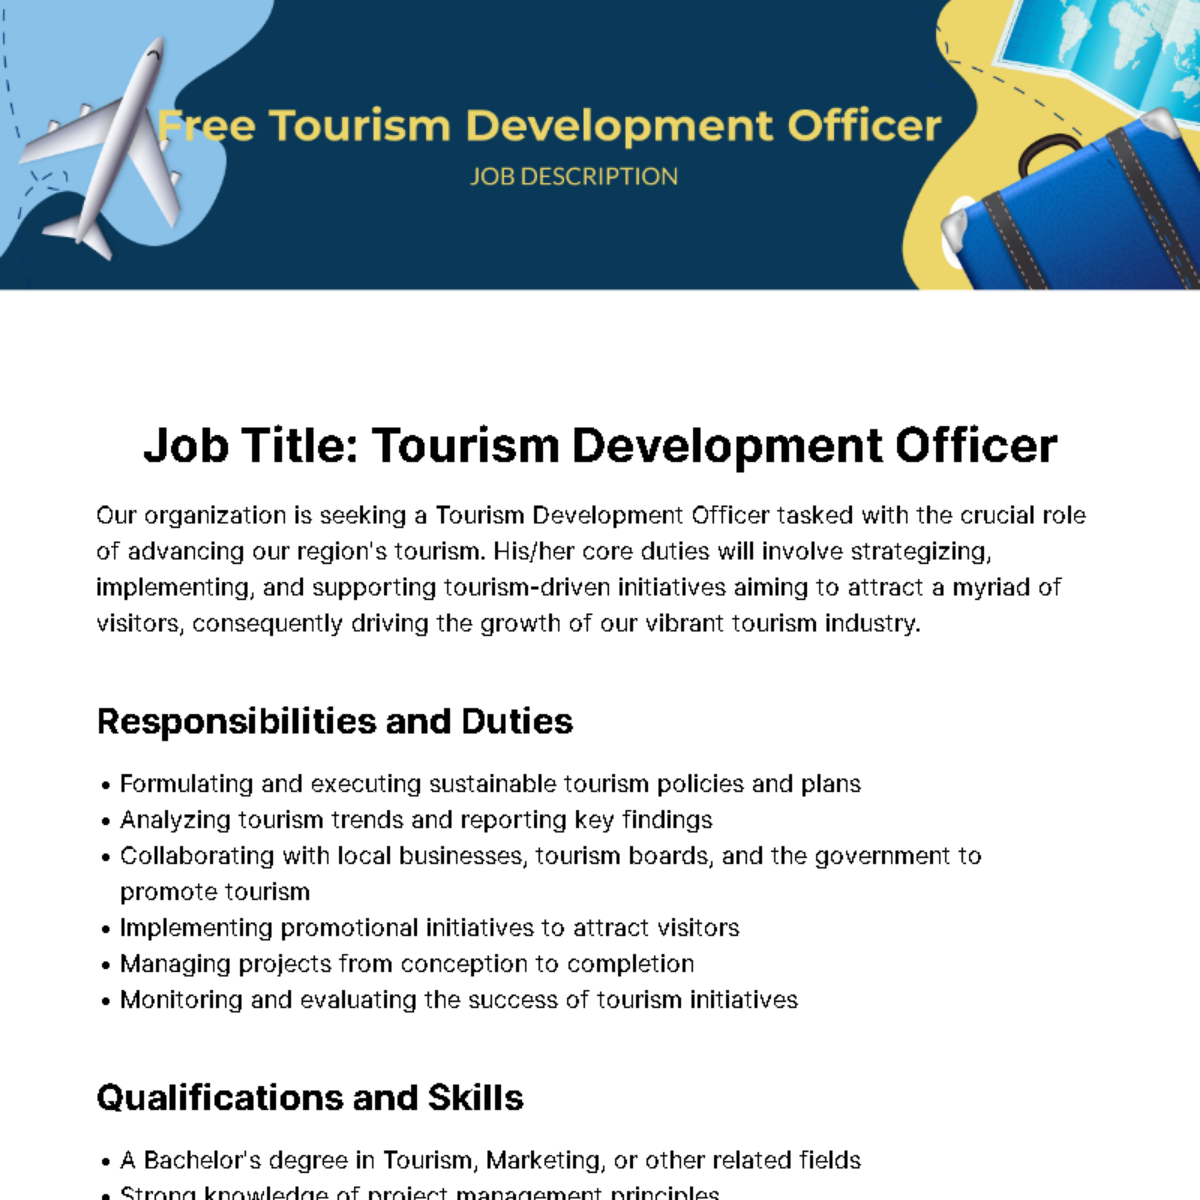 Free Tourism Development Officer Job Description Template